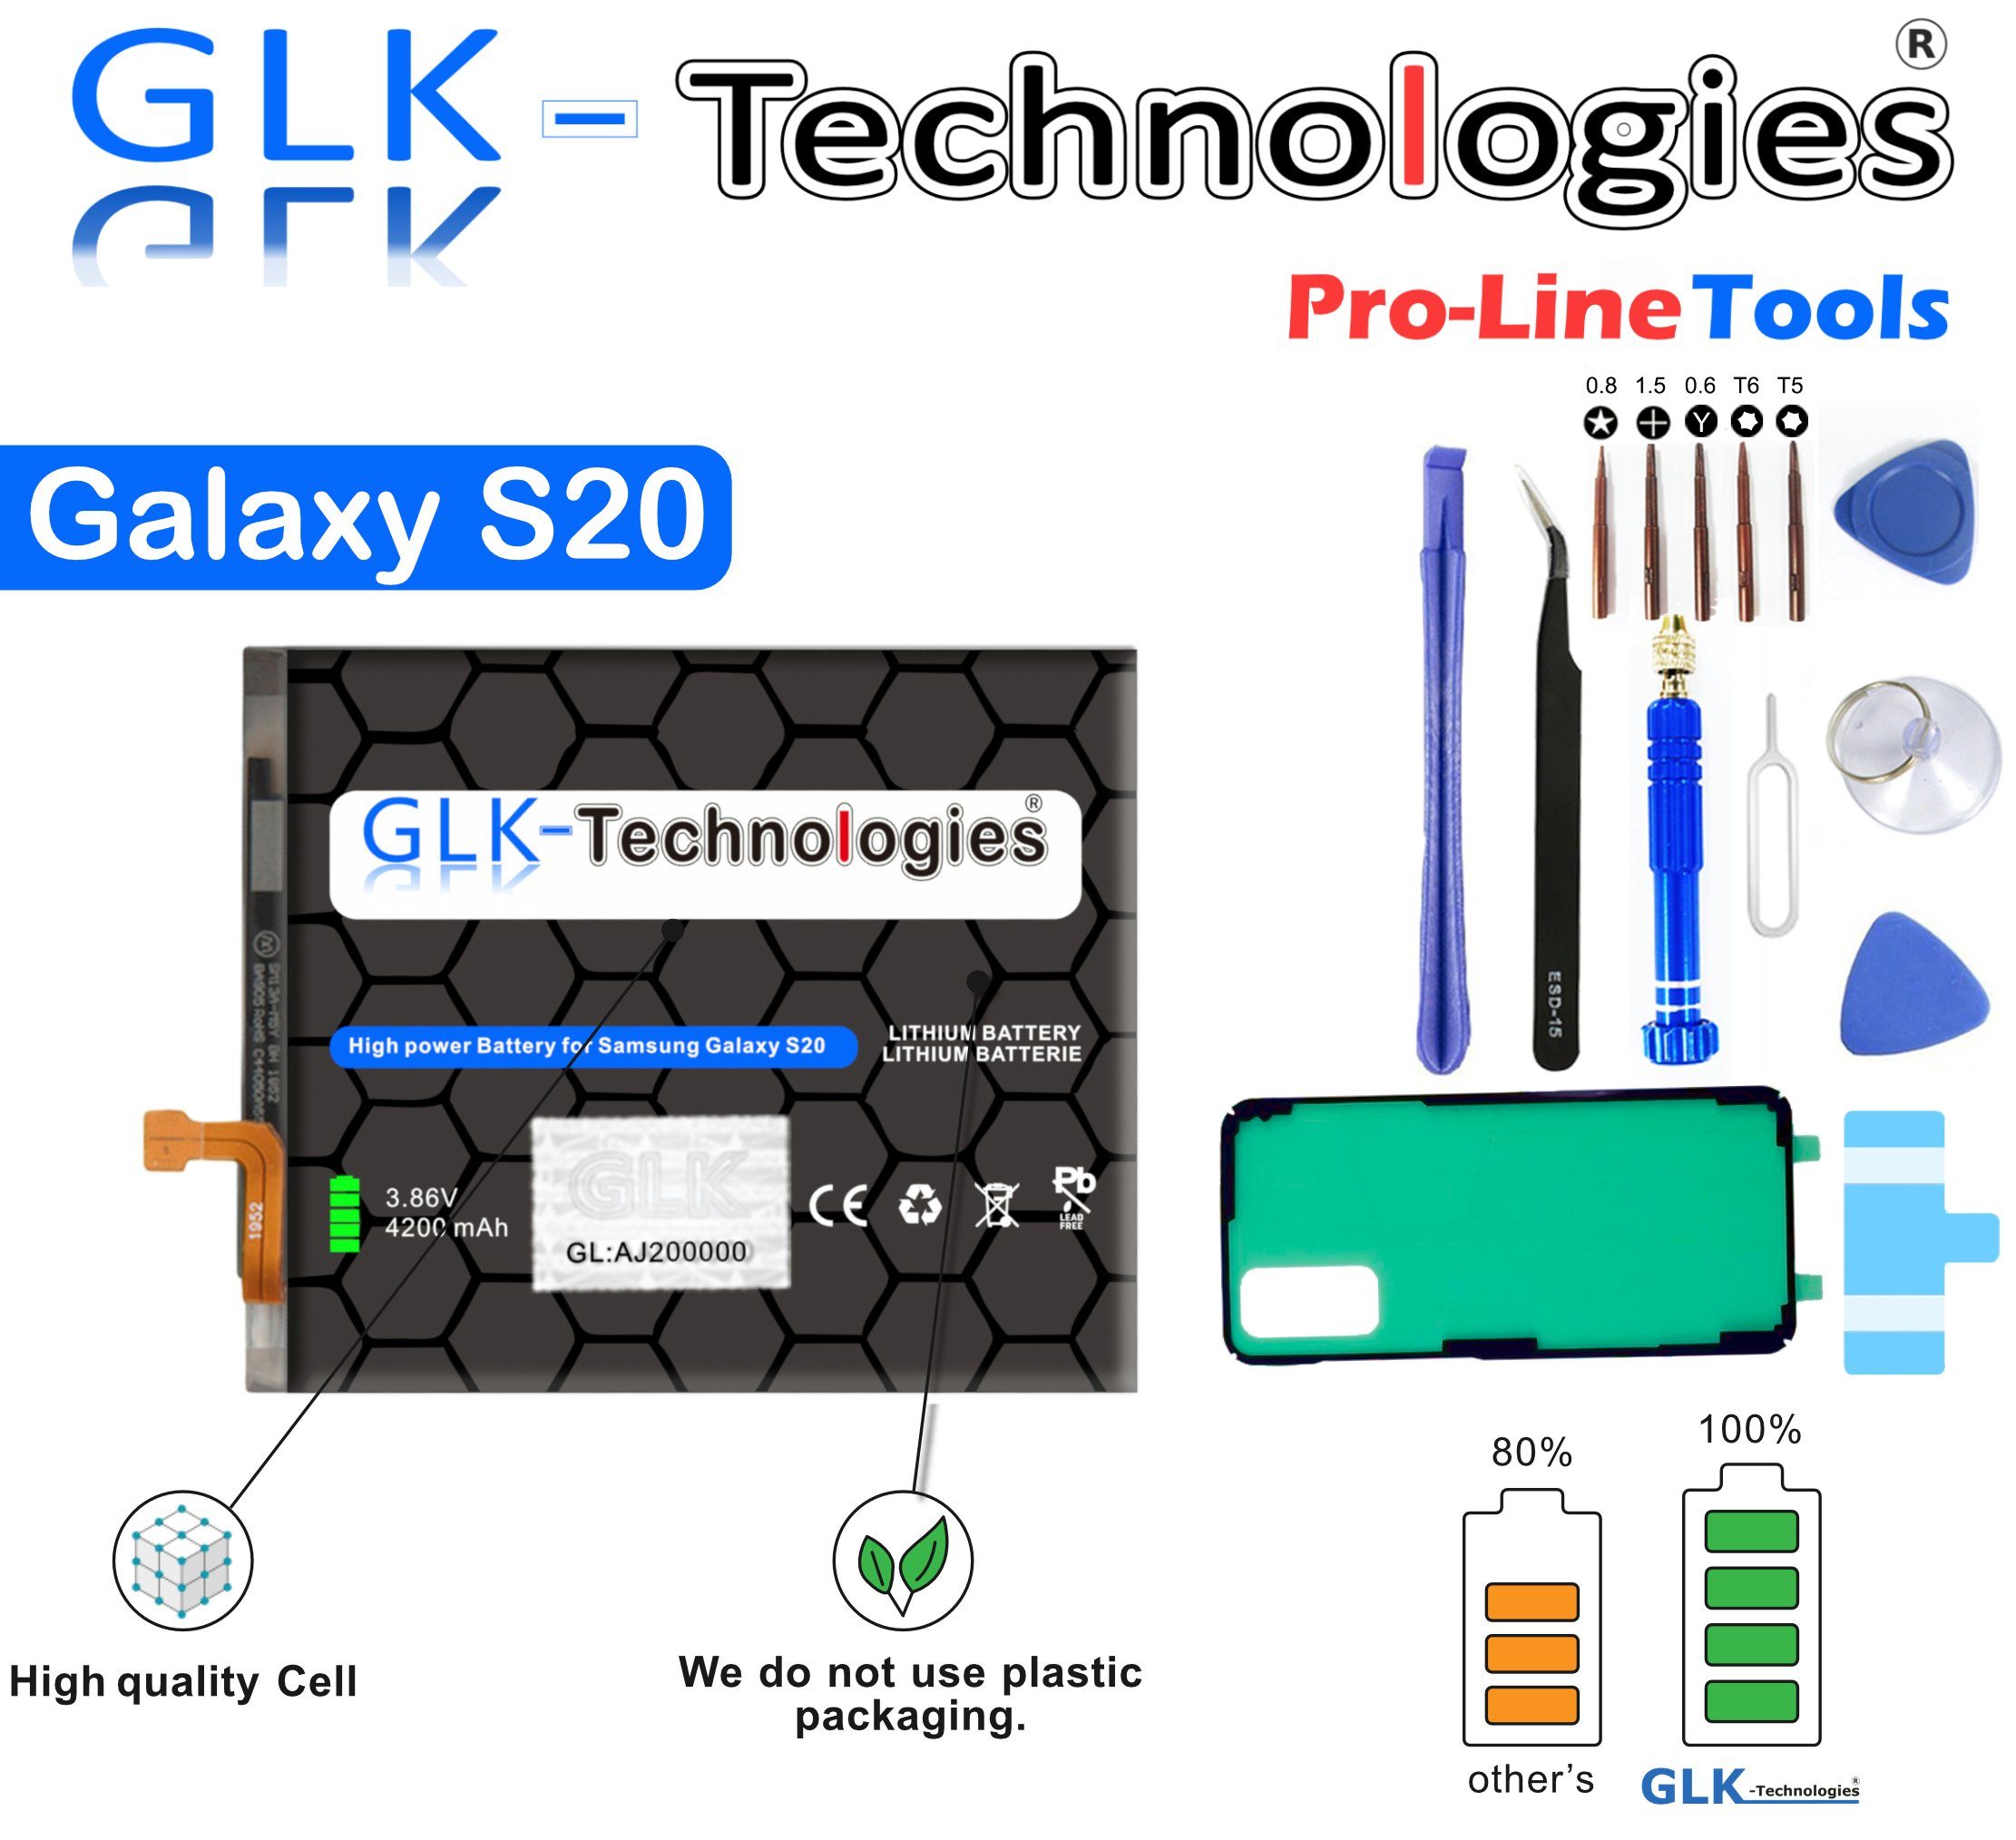 Akku inkl. 4200 mit (3.86 High V) Ersatzakku Original Werkzeug Smartphone-Akku Set GLK-Technologies EB-BG980ABY Samsung SM-G980F mAh GLK-Technologies Kit Power S20 kompatibel Galaxy